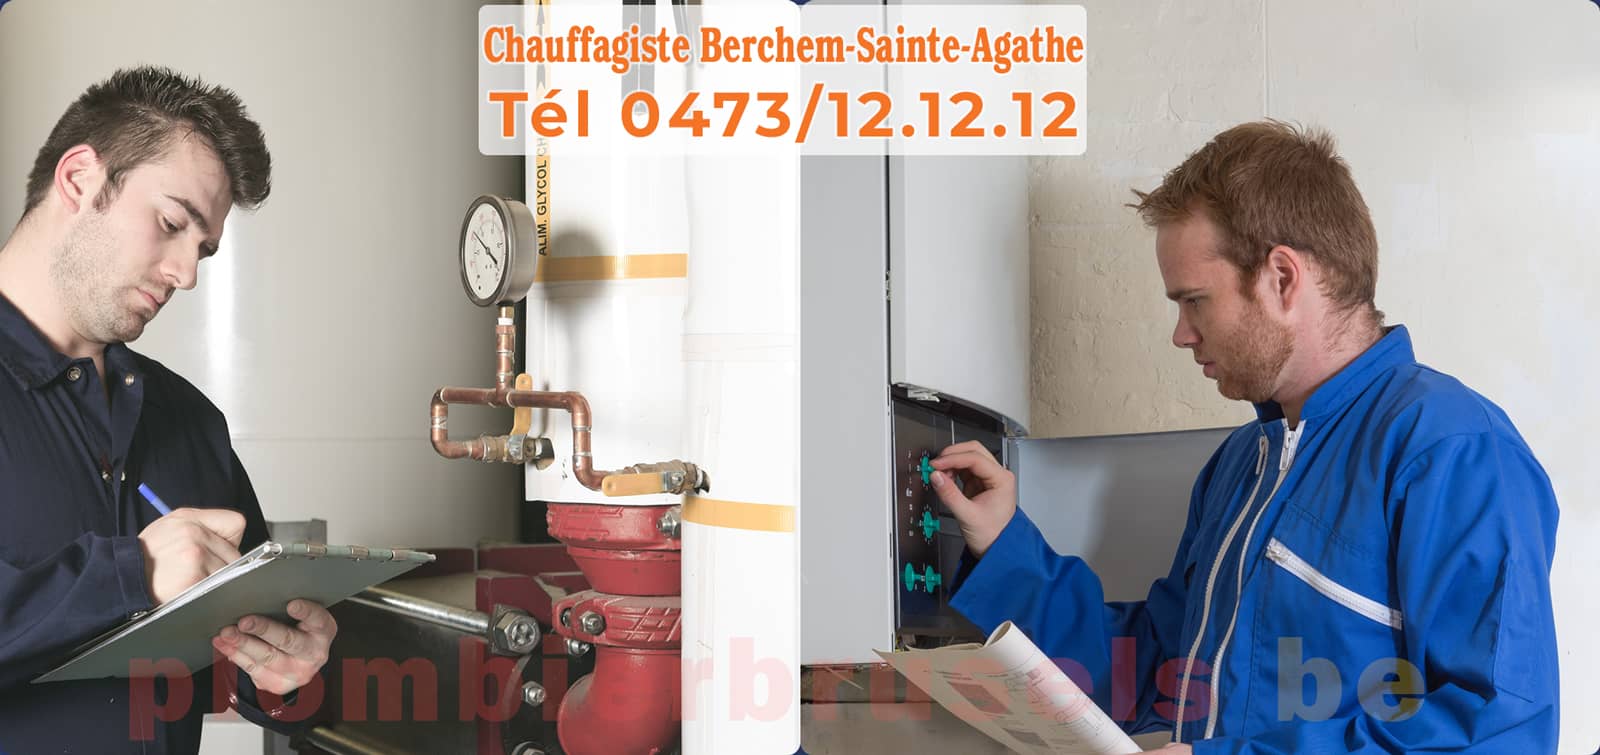 Chauffagiste Berchem-Sainte-Agathe service de Chauffage tél 0473/12.12.12